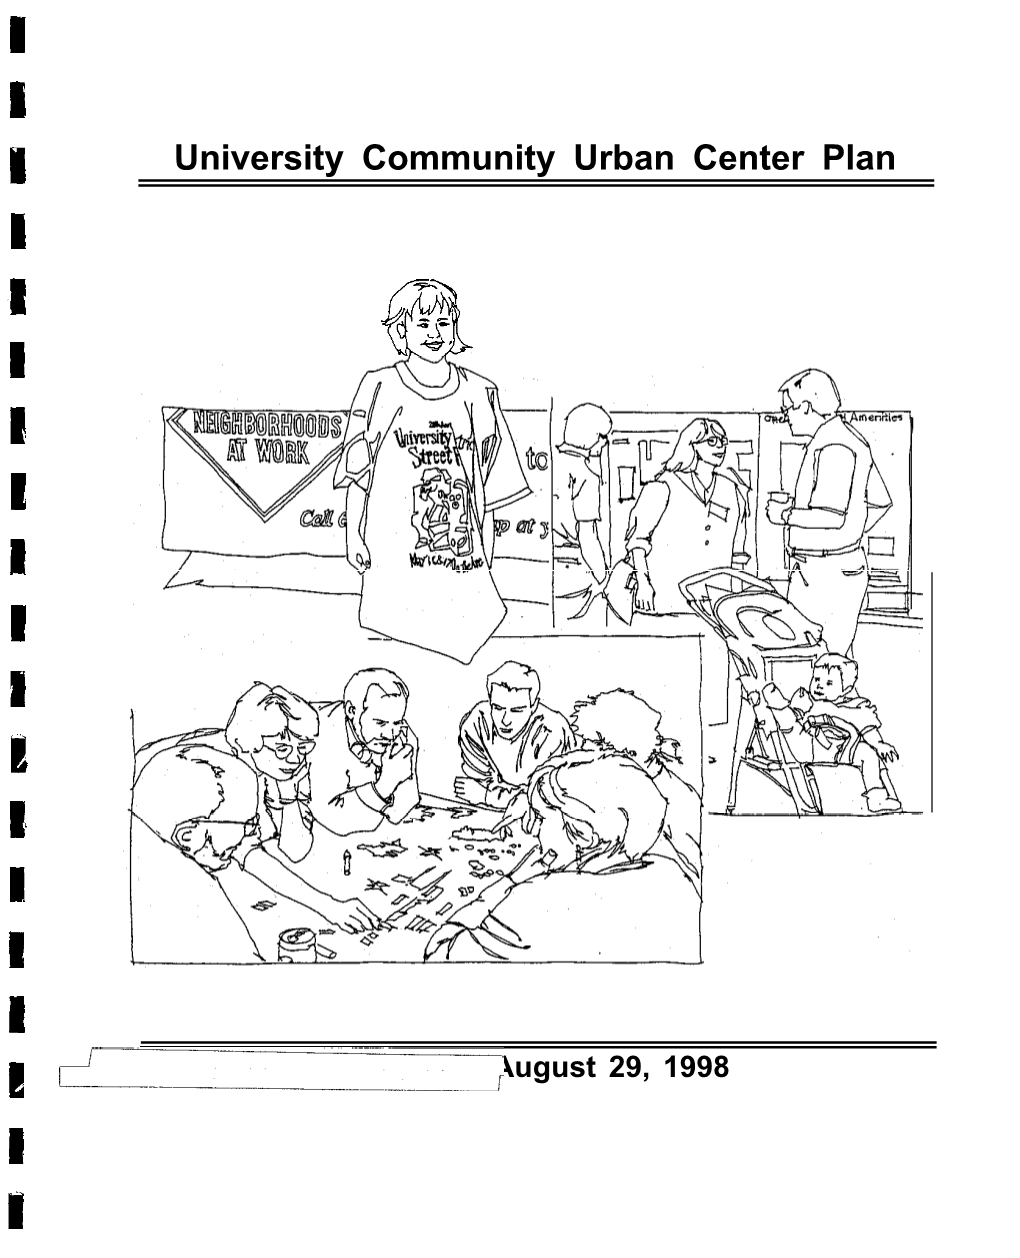 University Community Urban Center Neighborhood Plan